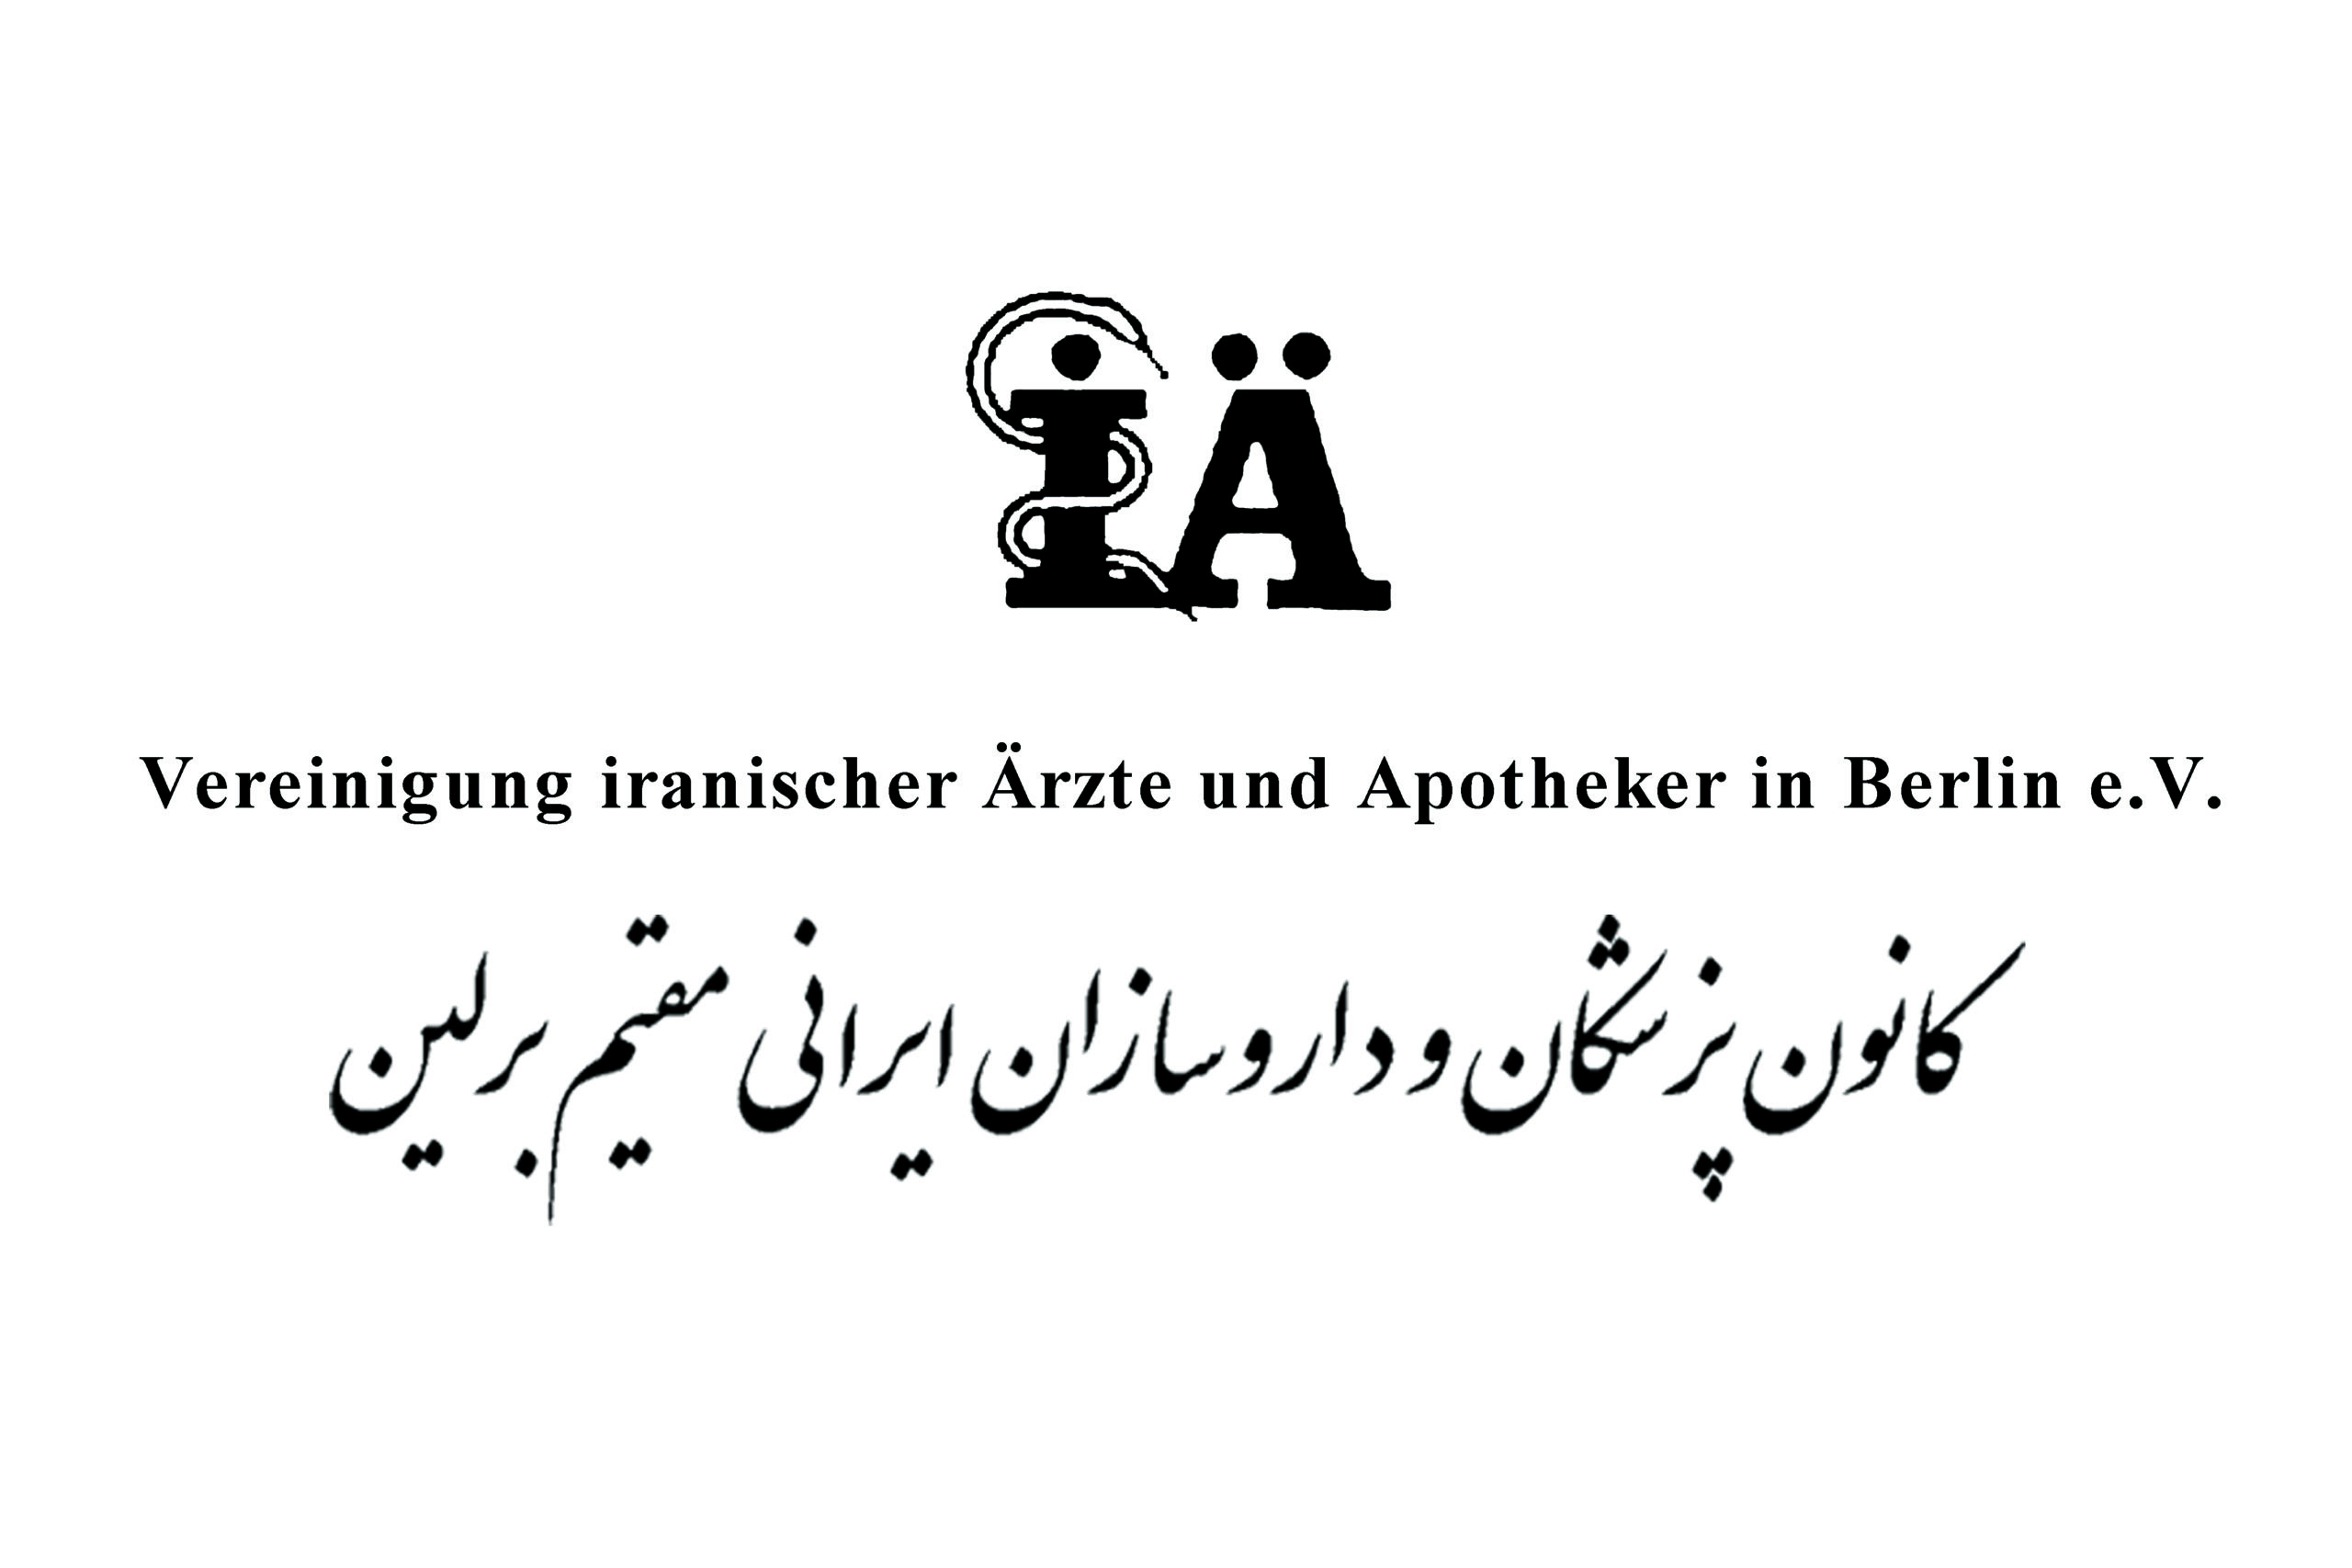 Vereinigung iran. Ärzte & Apotheker in Berlin e.V.